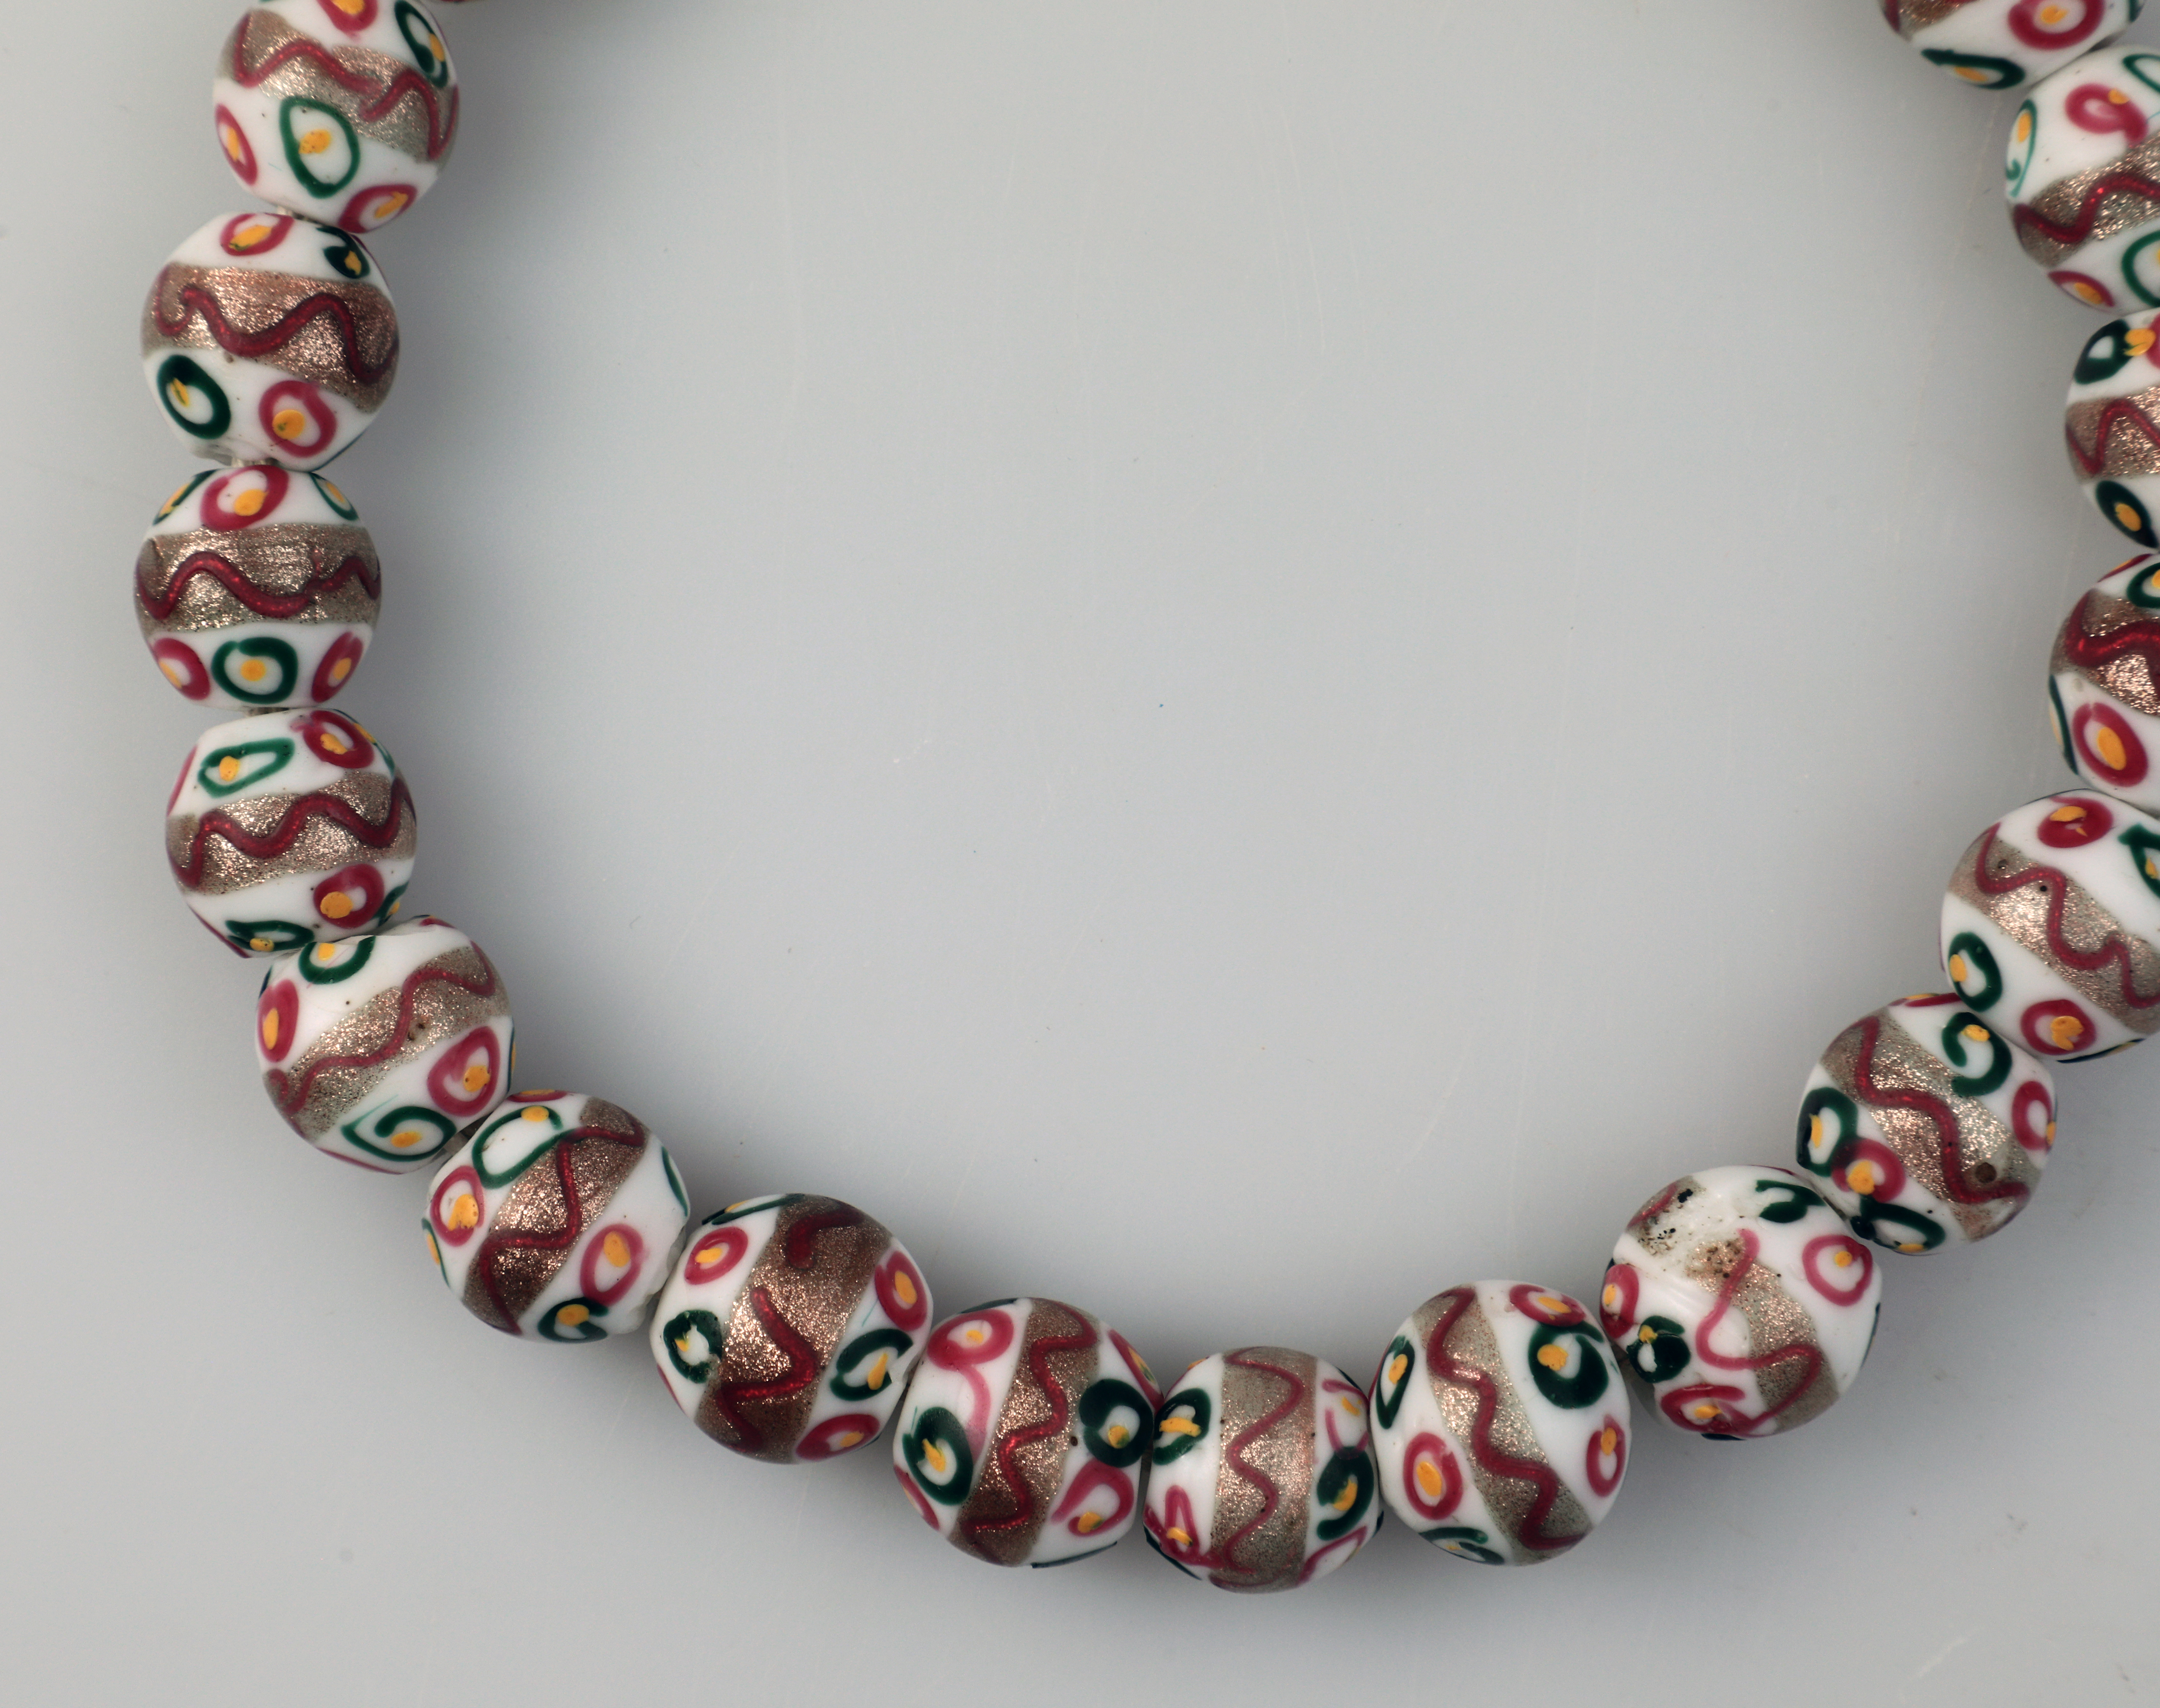 Antique Venetian Beads Murano Glass Necklace - Black Millefiori